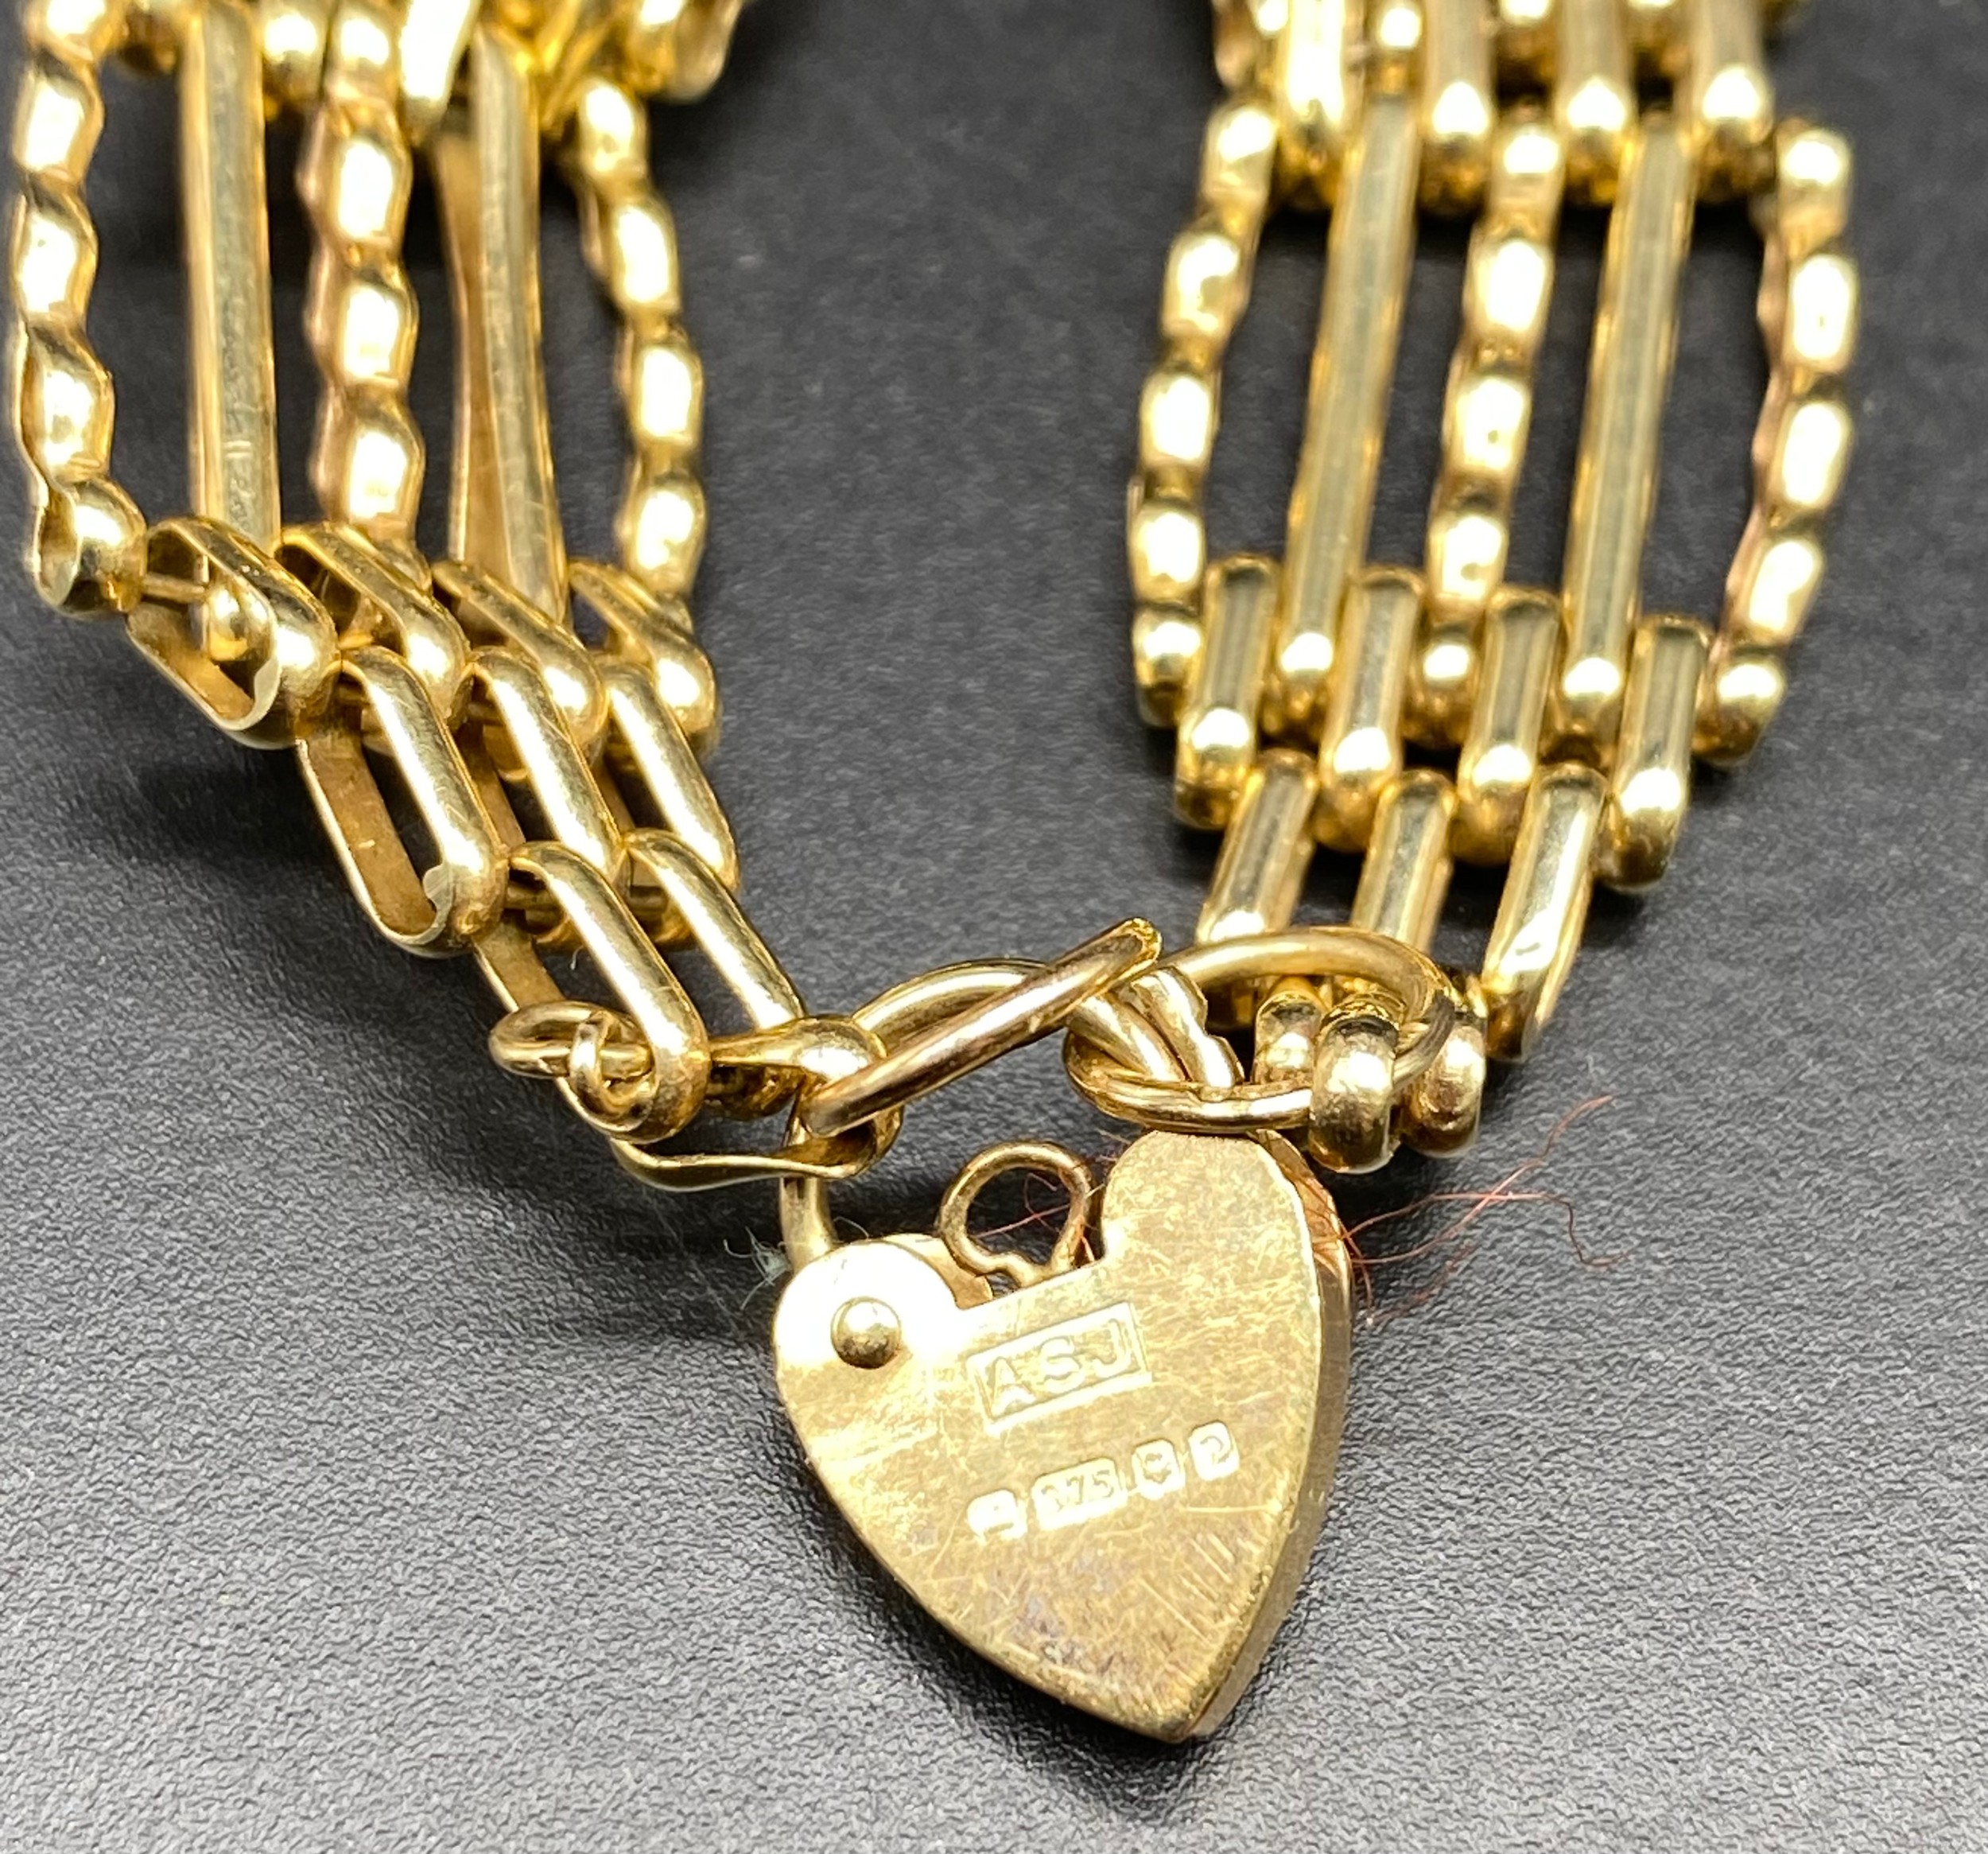 9ct gold 375 hallmarked gate bracelet [10.45g] - Image 2 of 2